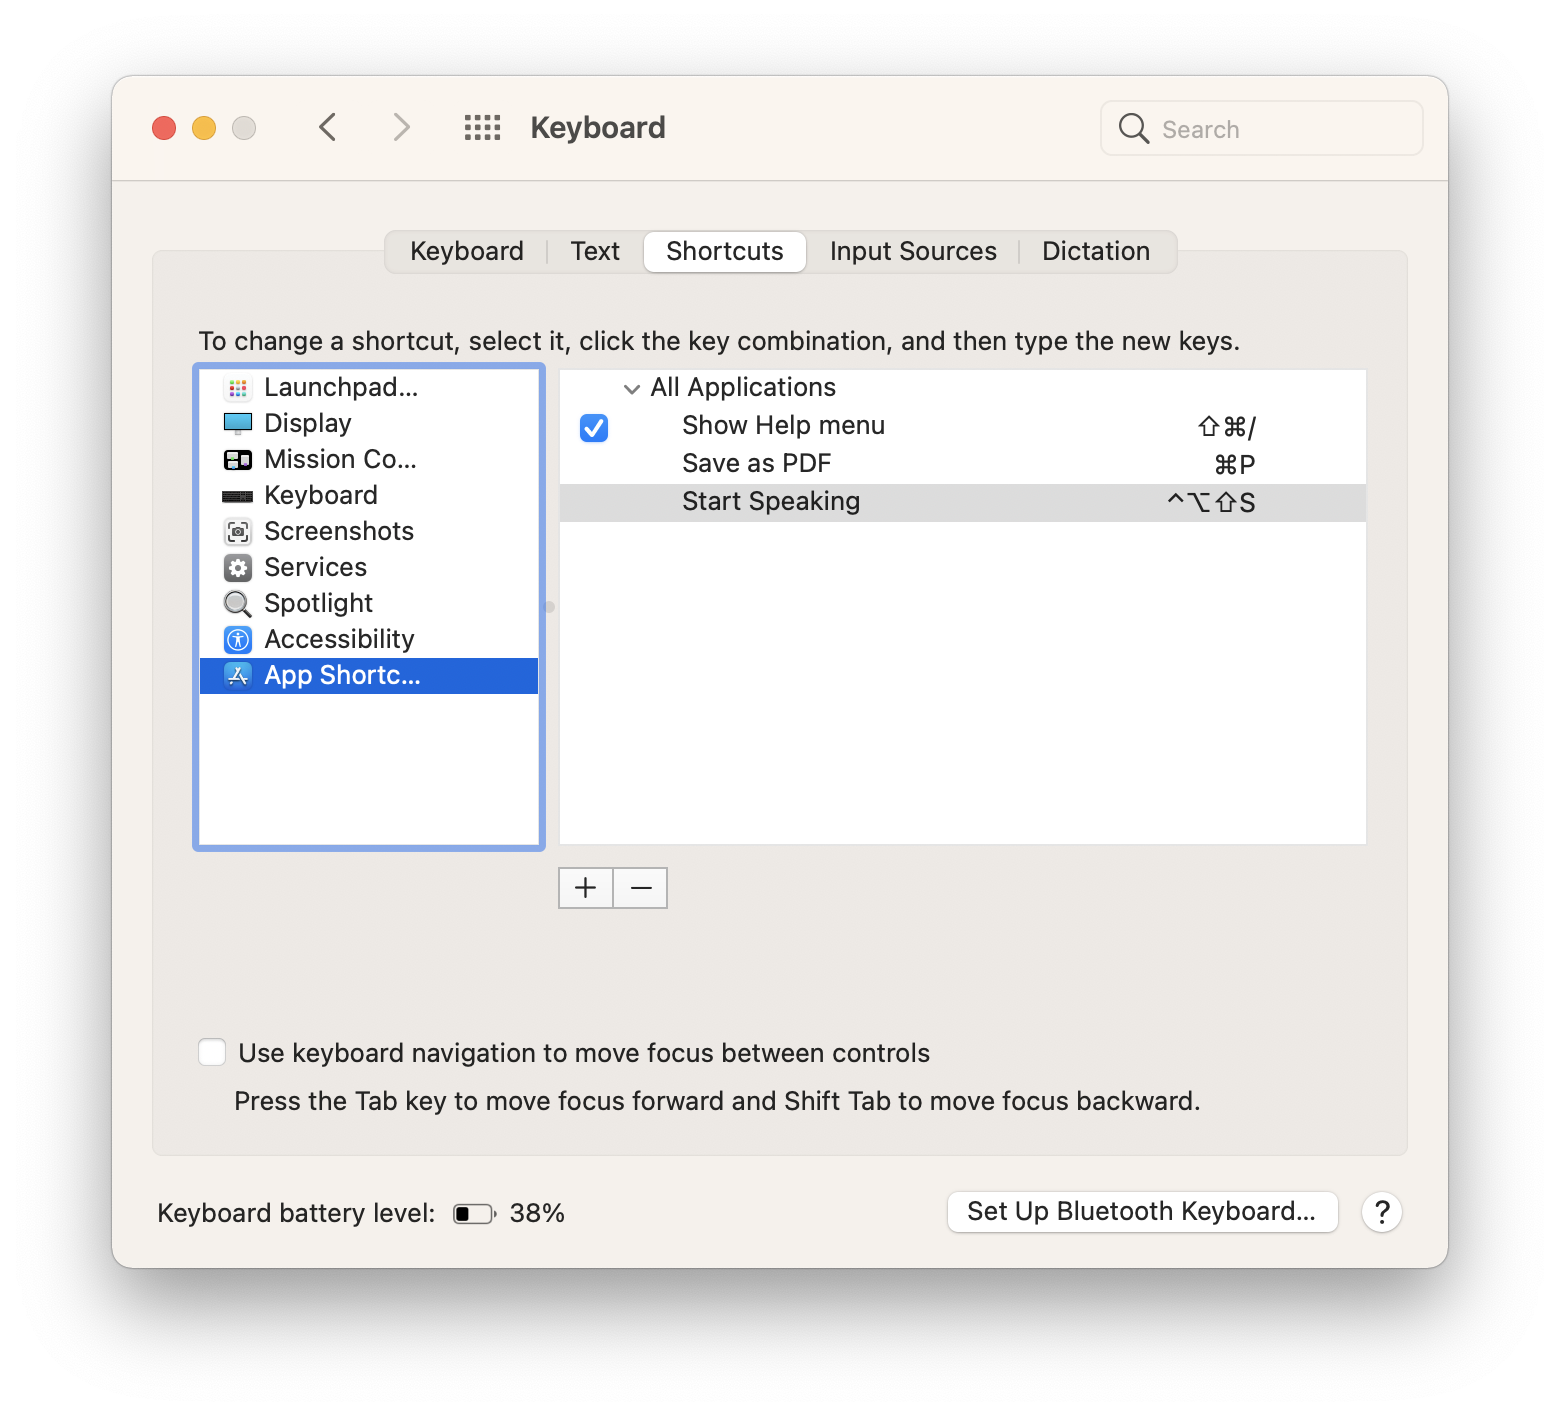 keyboard settings screen showing custom keyboard shortcuts